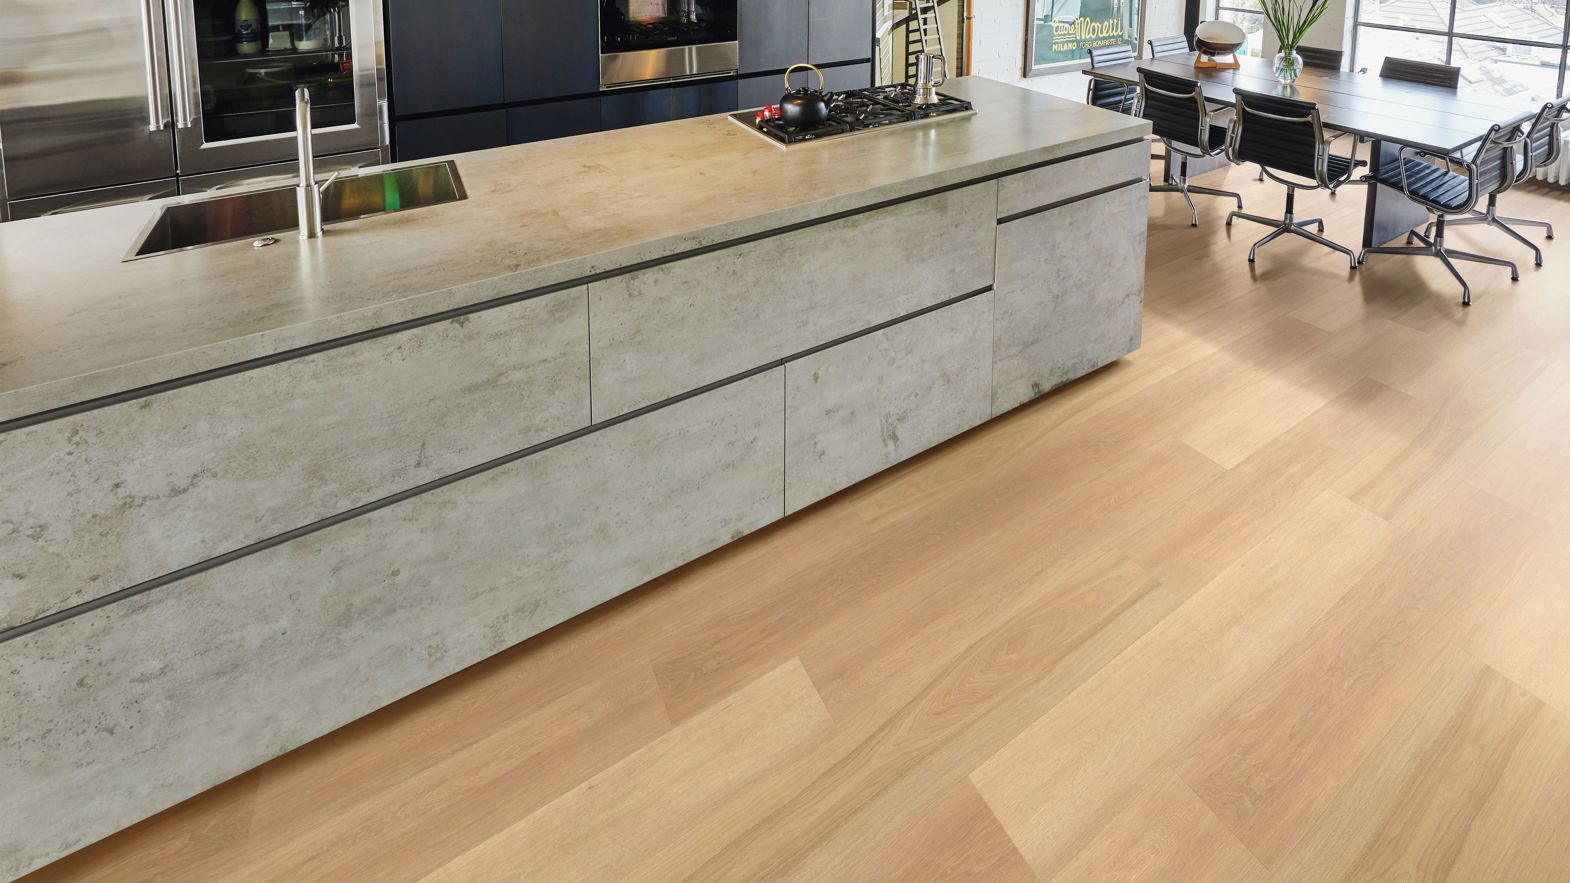 Elevate your kitchen with opulent luxury vinyl underfoot.